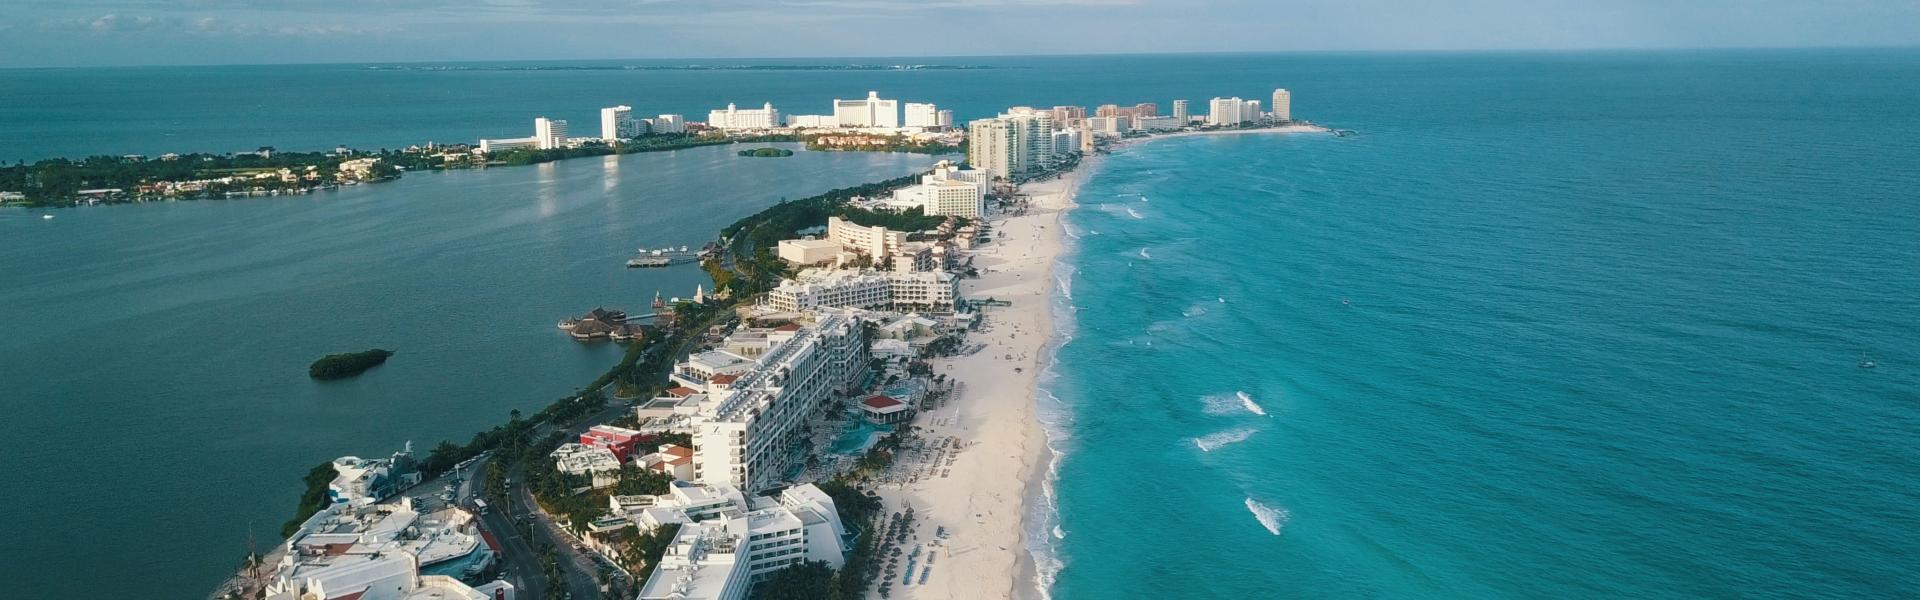 Cancun Scenic View